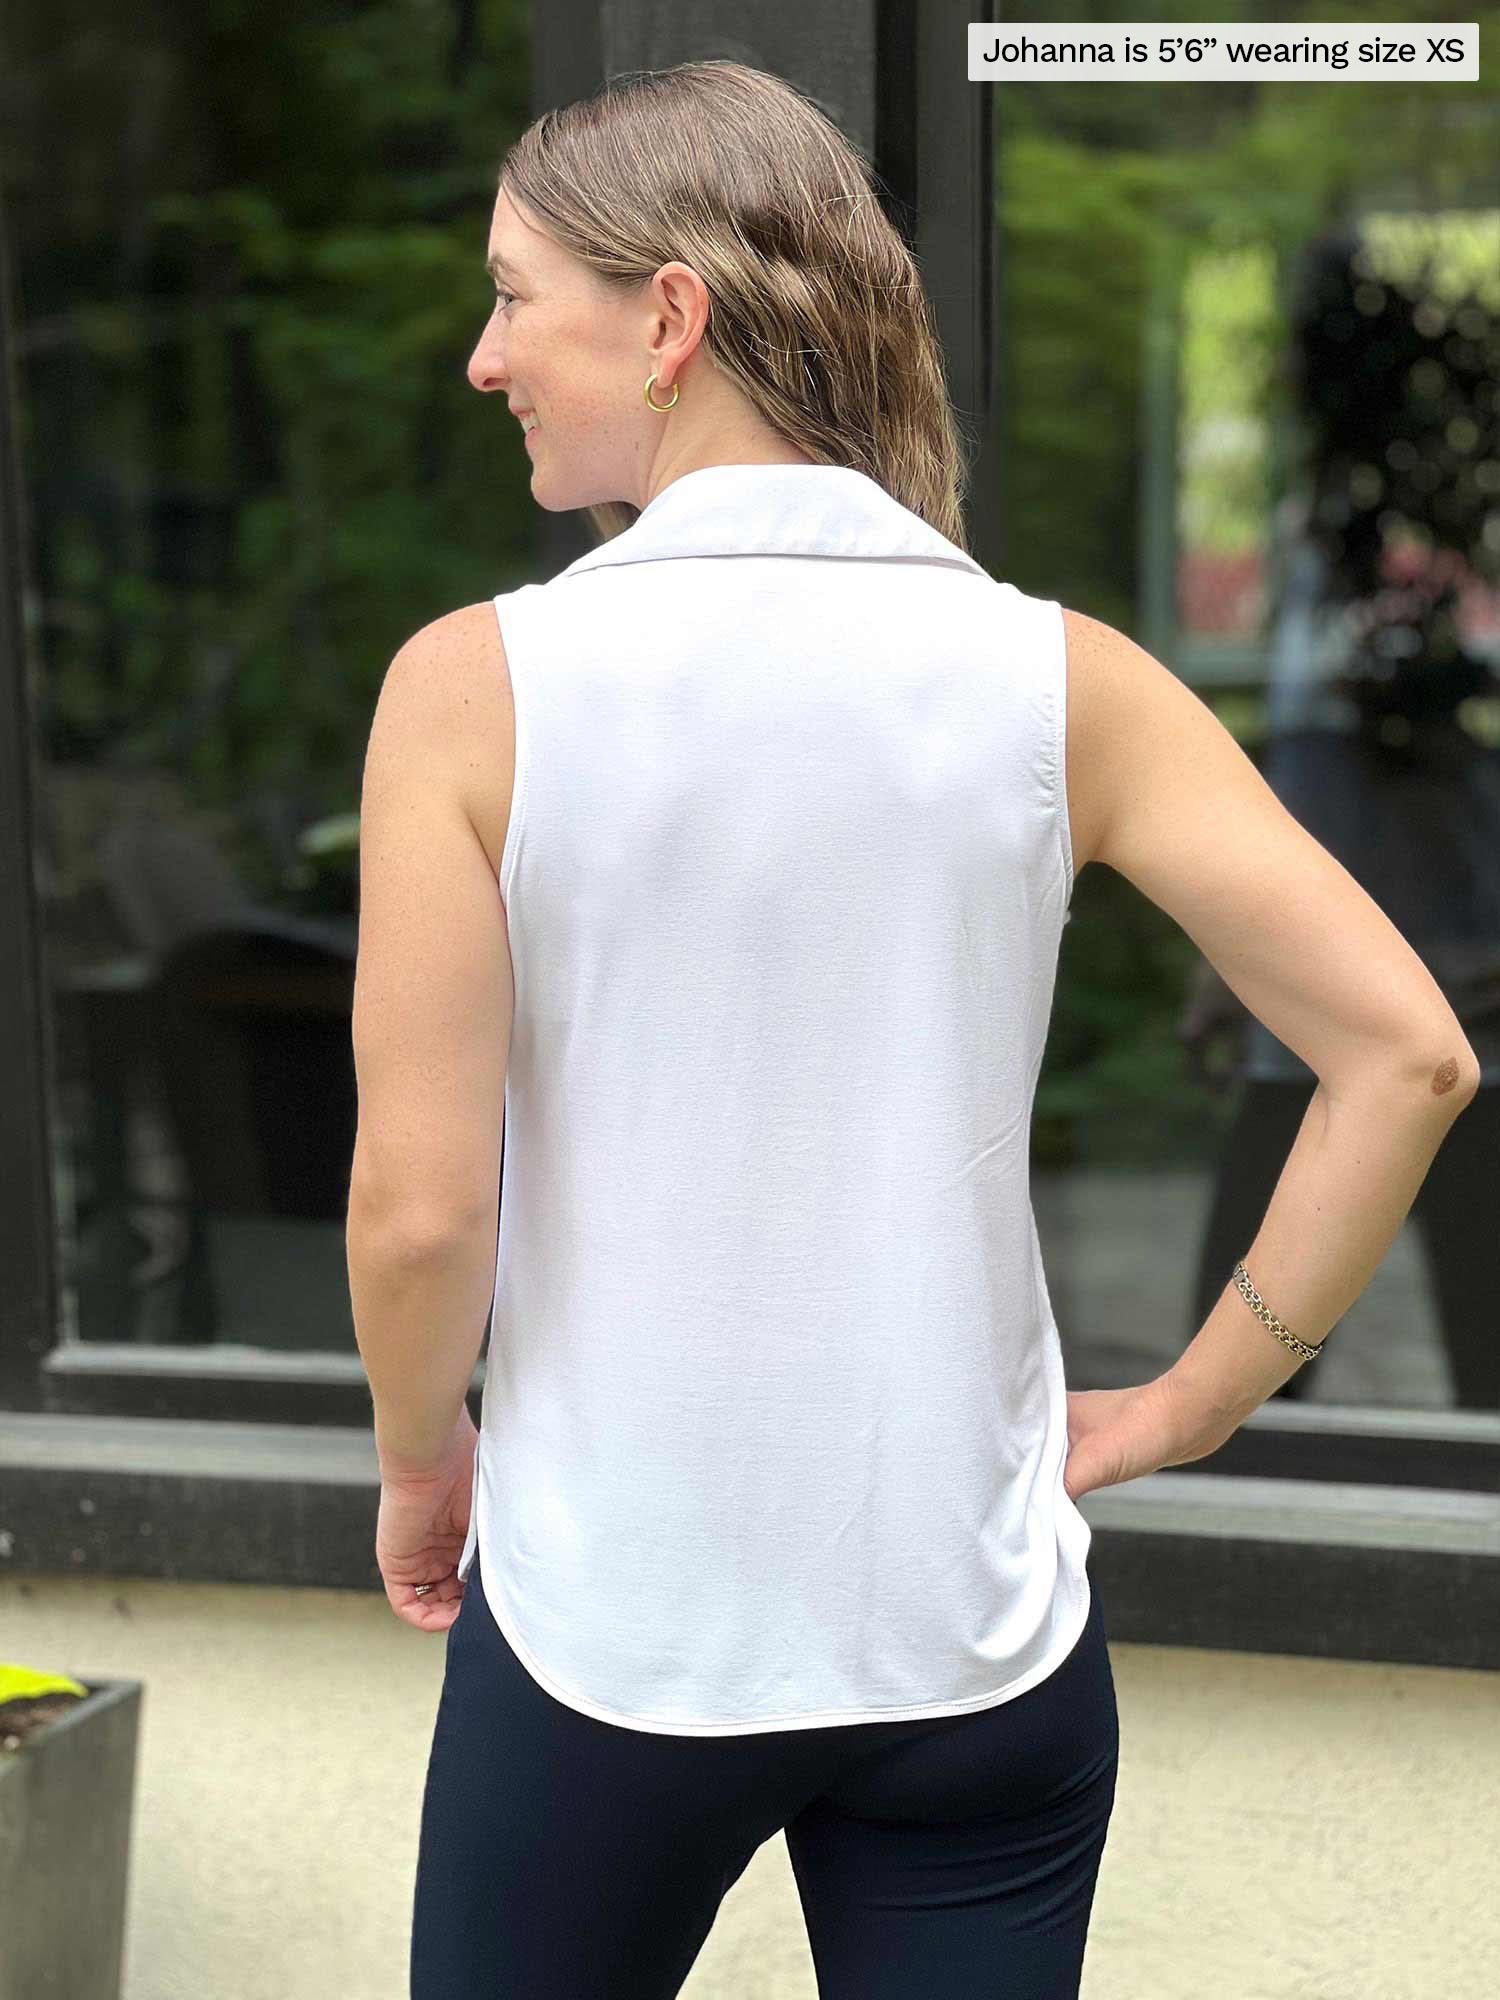 Mika sleeveless collared shirt  Sustainable women's fashion made